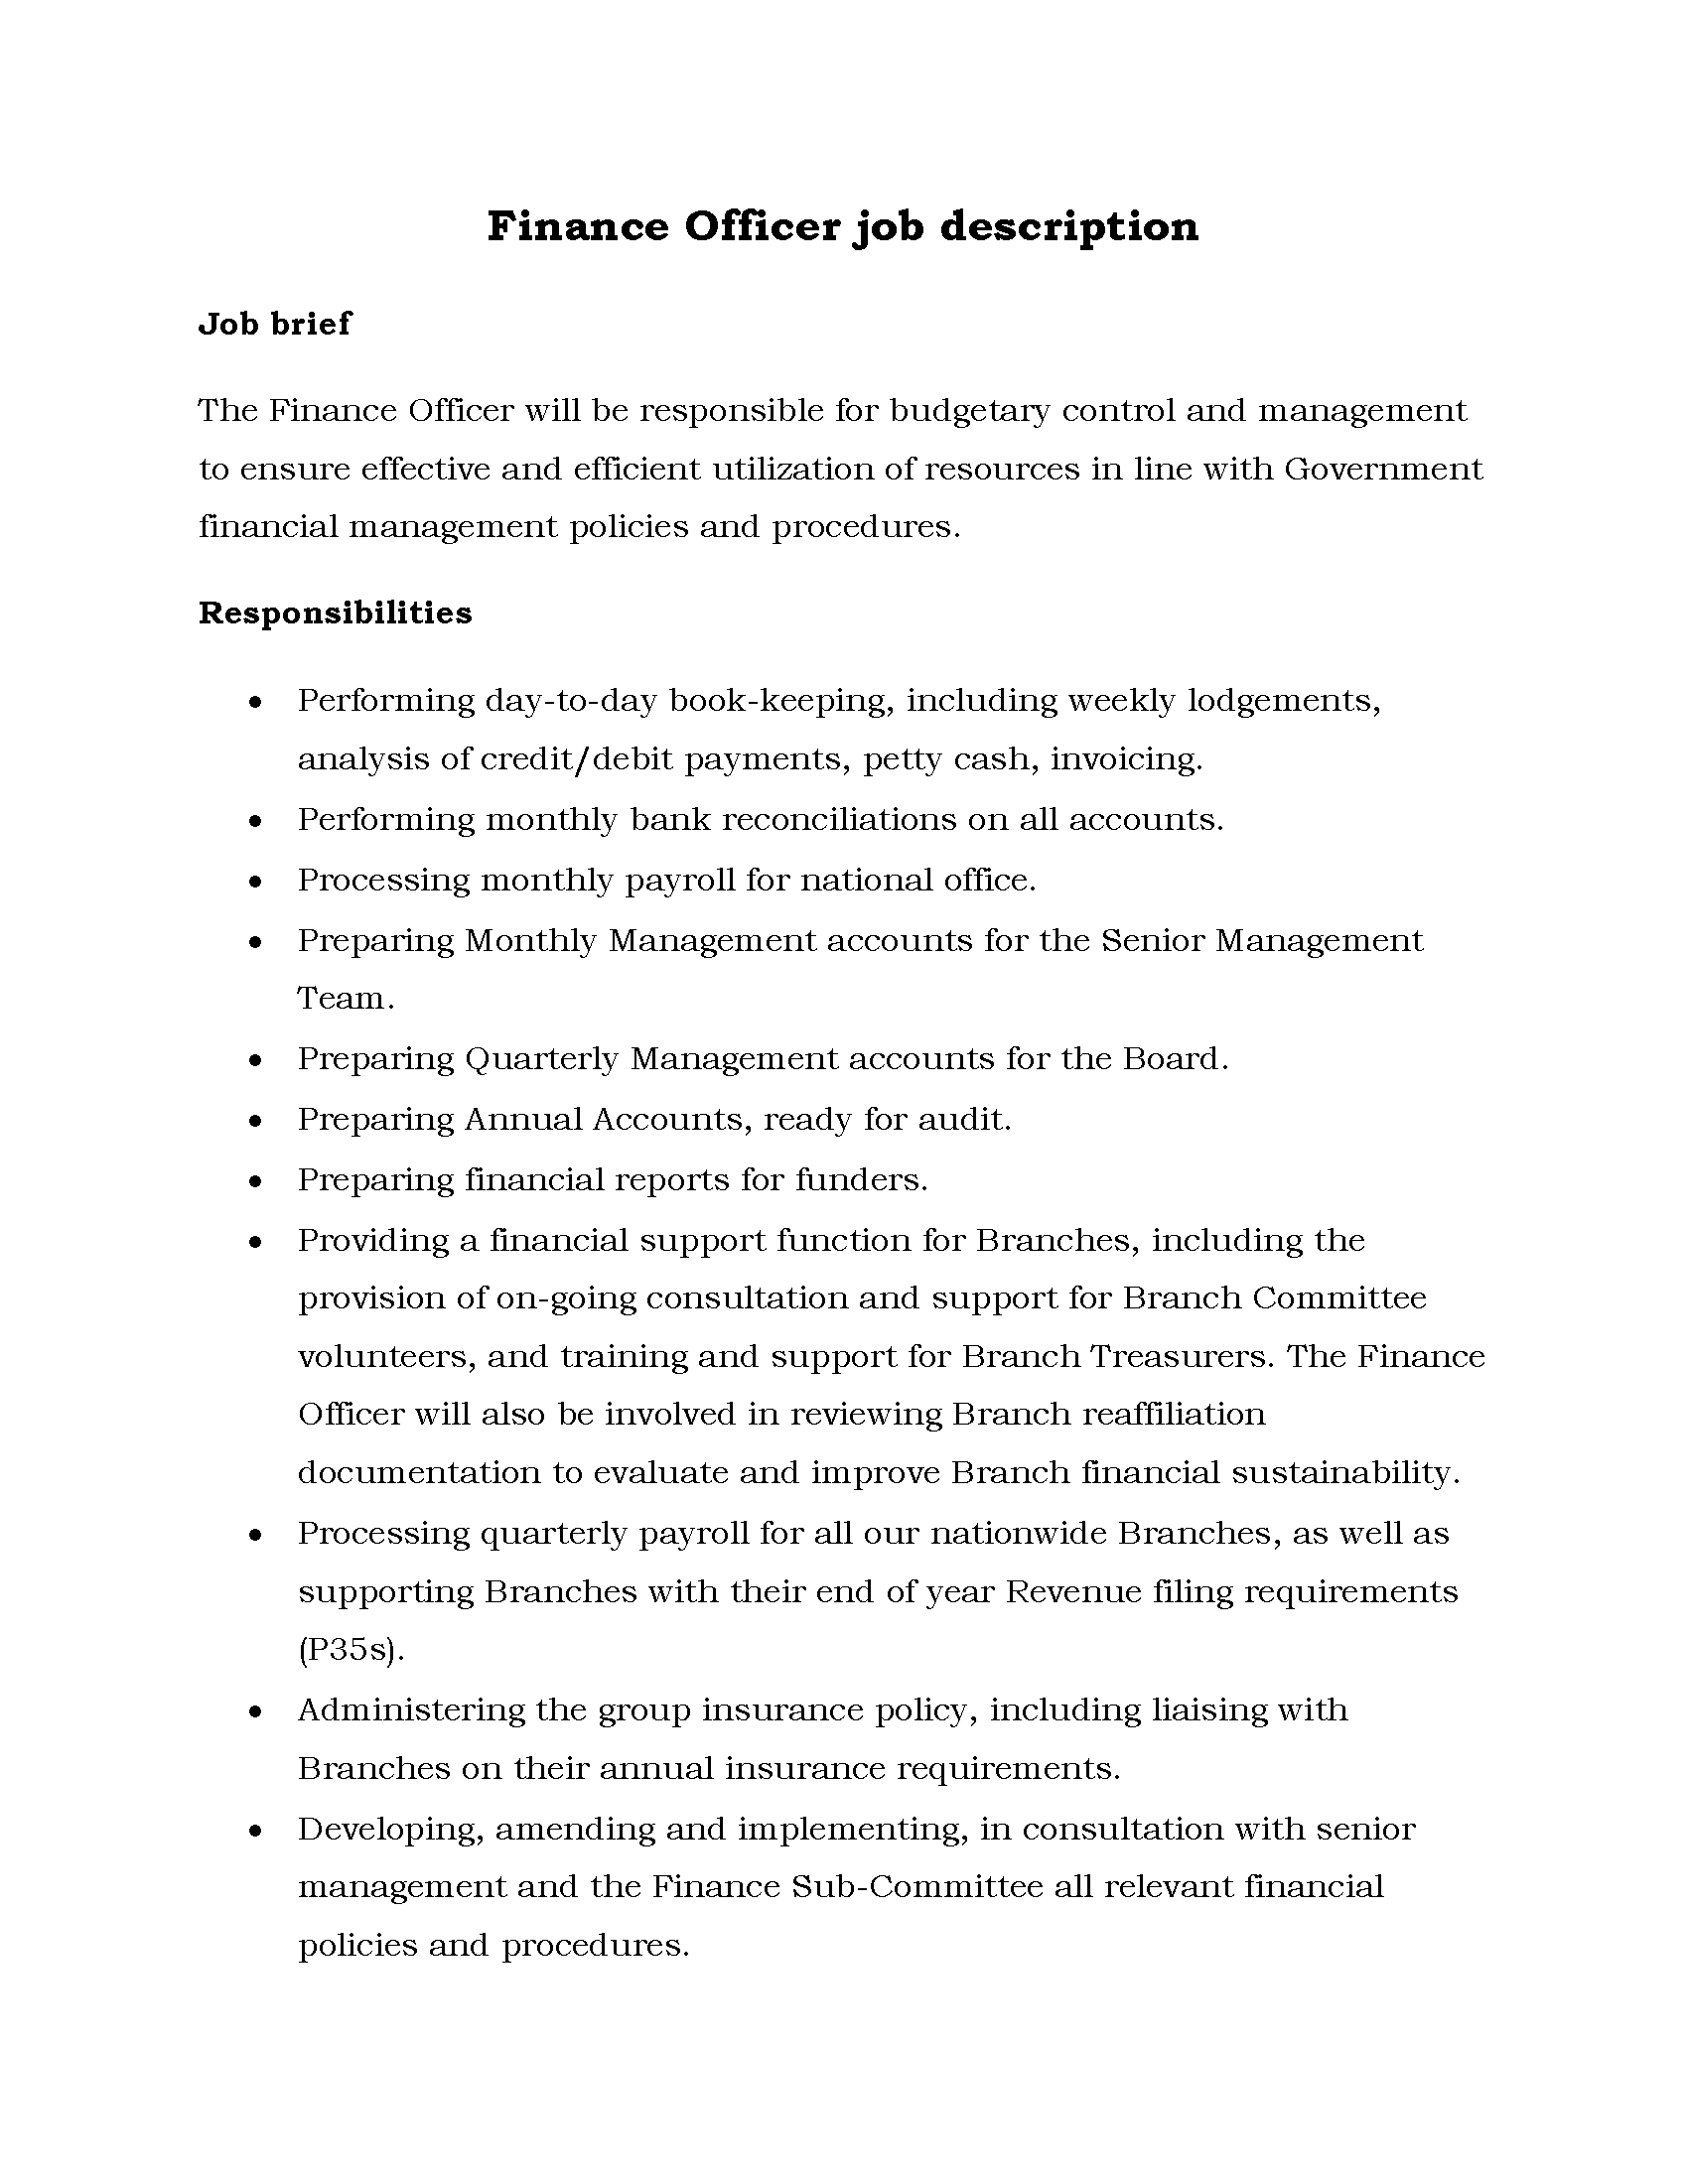 38-Finance Officer job description